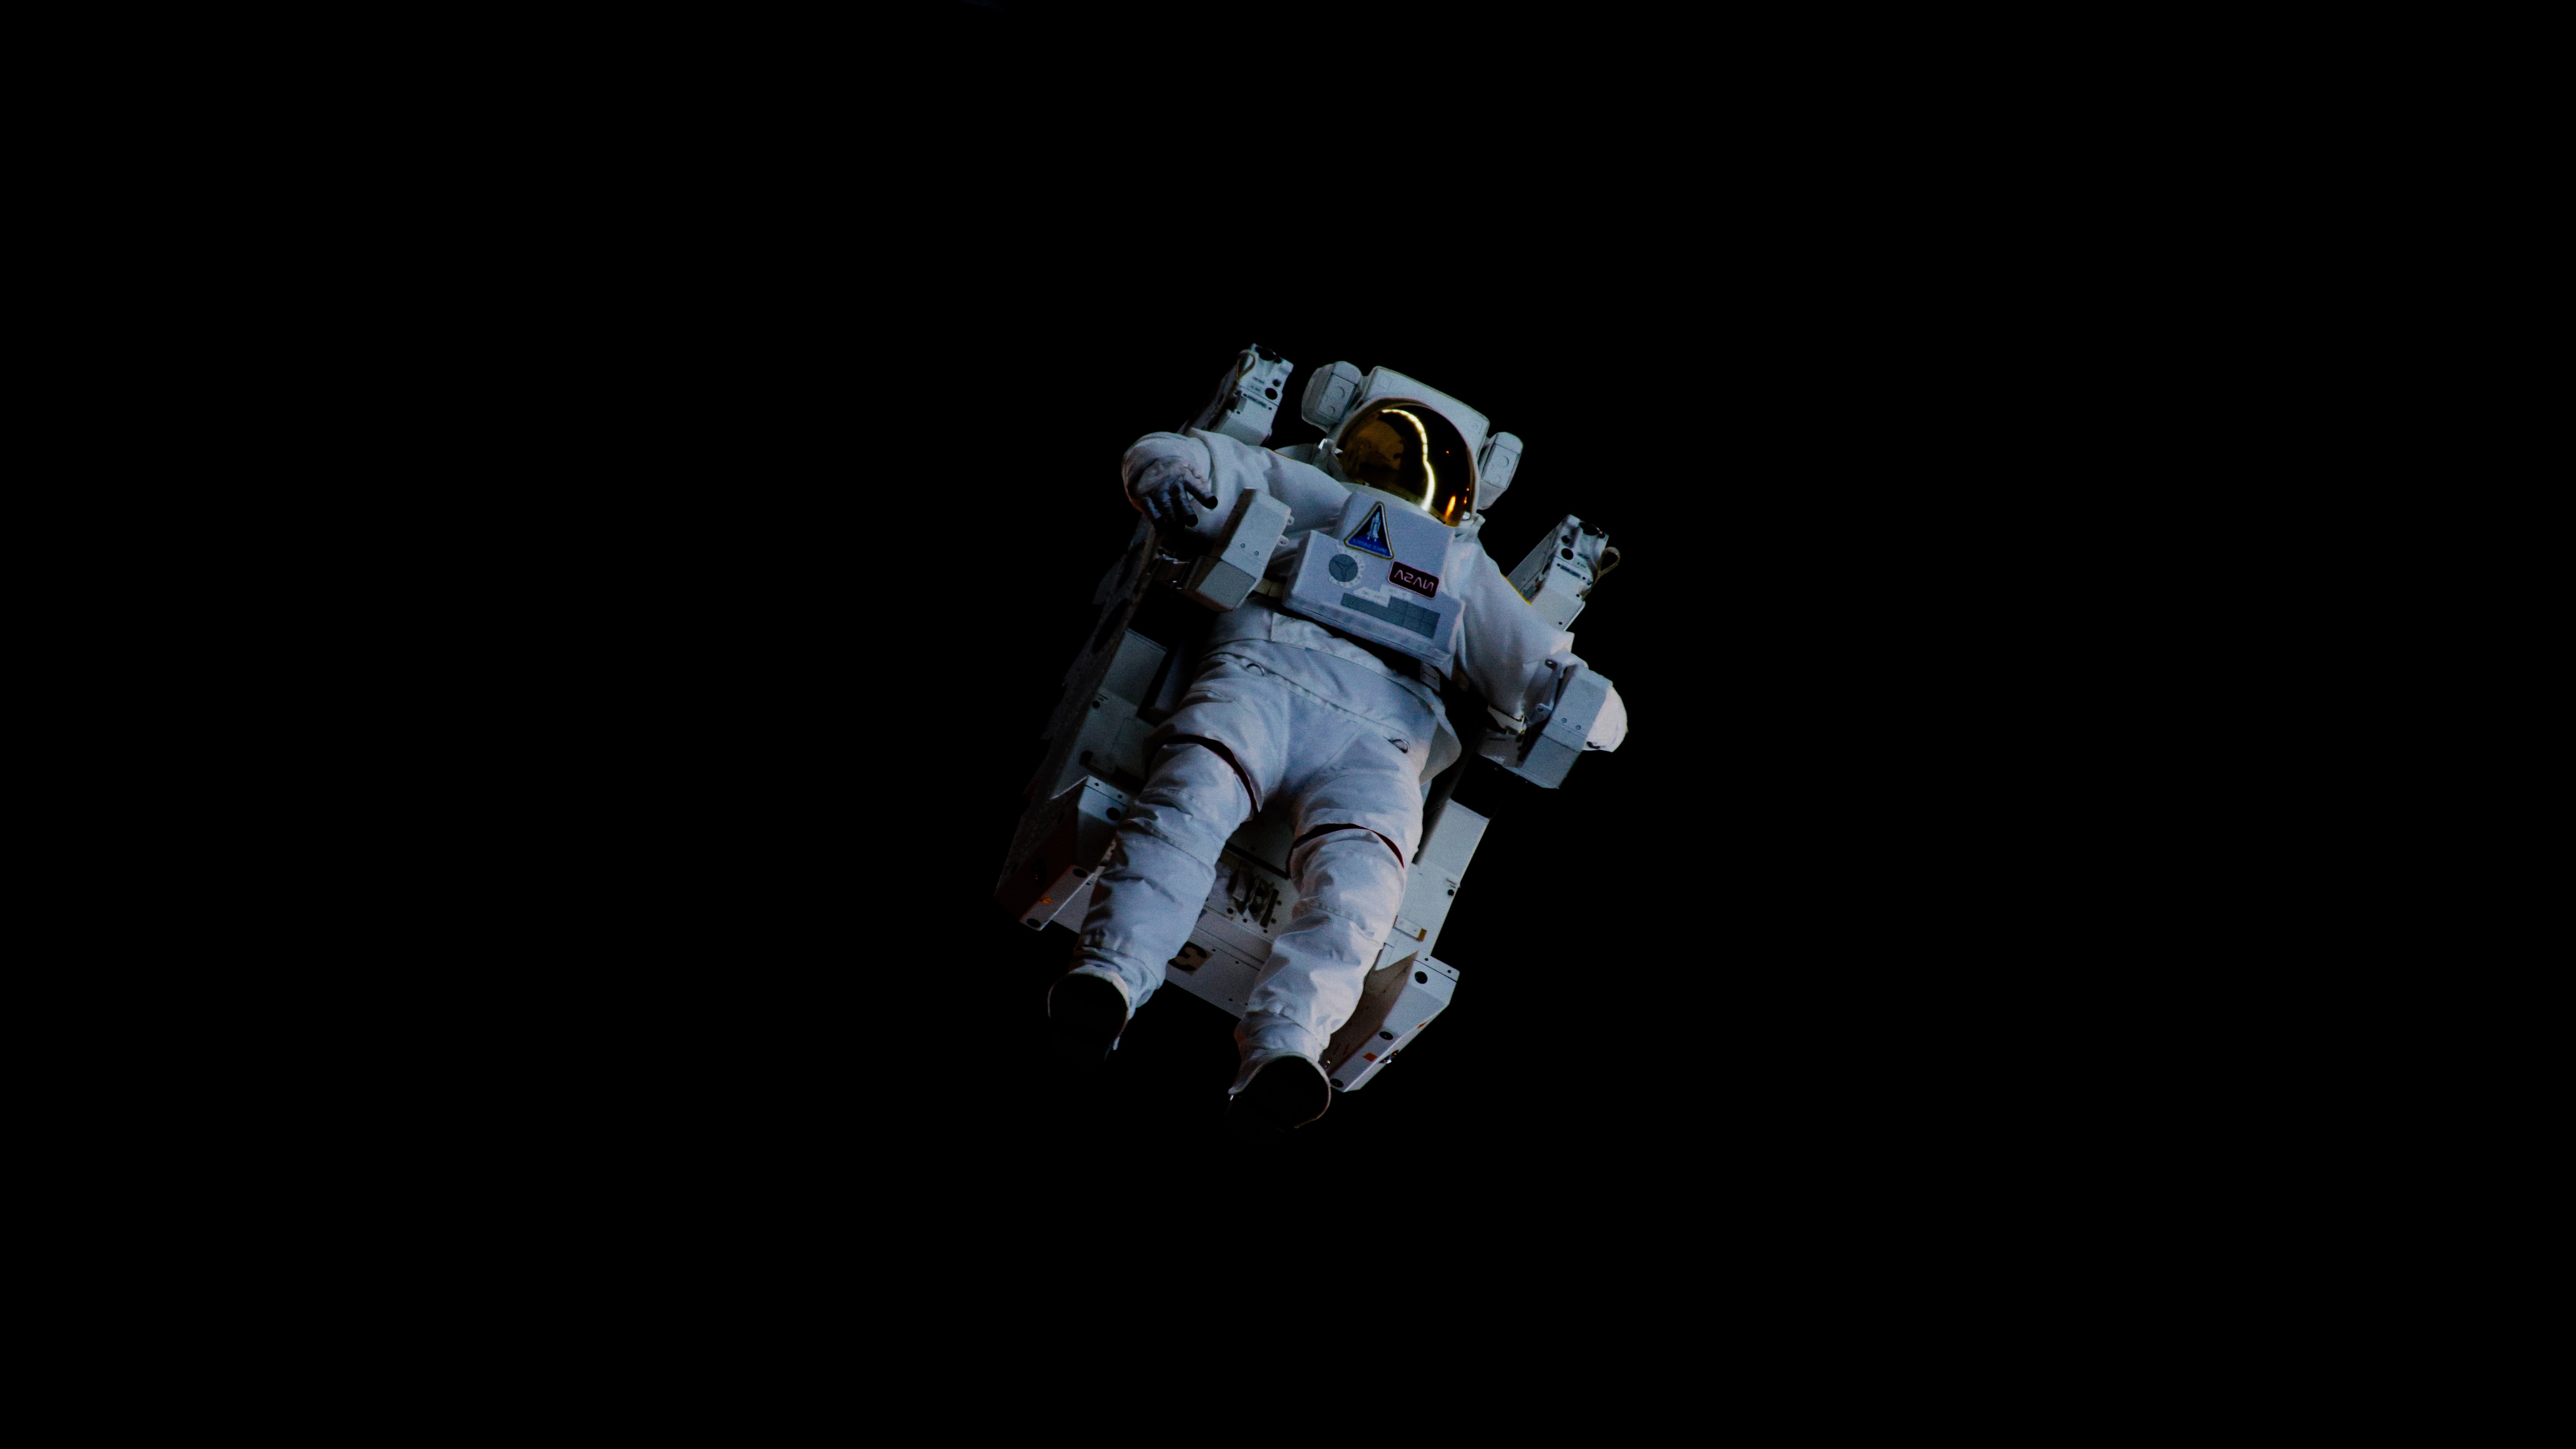 Astronaut wallpaper - backiee